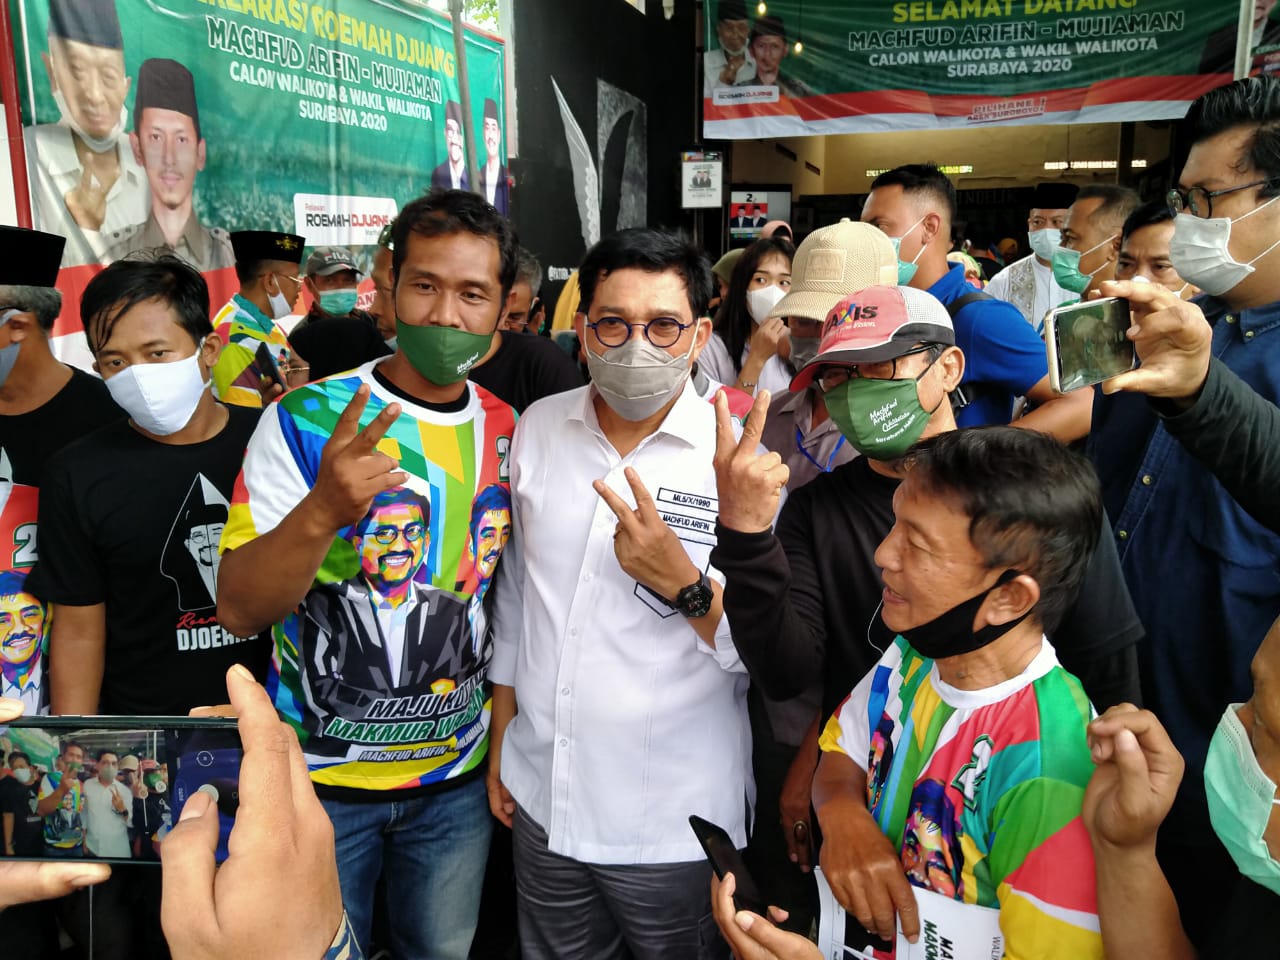 Cawali Surabaya, Machfud Arifin menerima permintaan foto bareng warga ketika peresmian Roemah Djuang di Kejawen Putih T, Surabaya, Kamis 3 Desember 2020. (Foto: Fariz Yarbo/Ngopibareng.id)